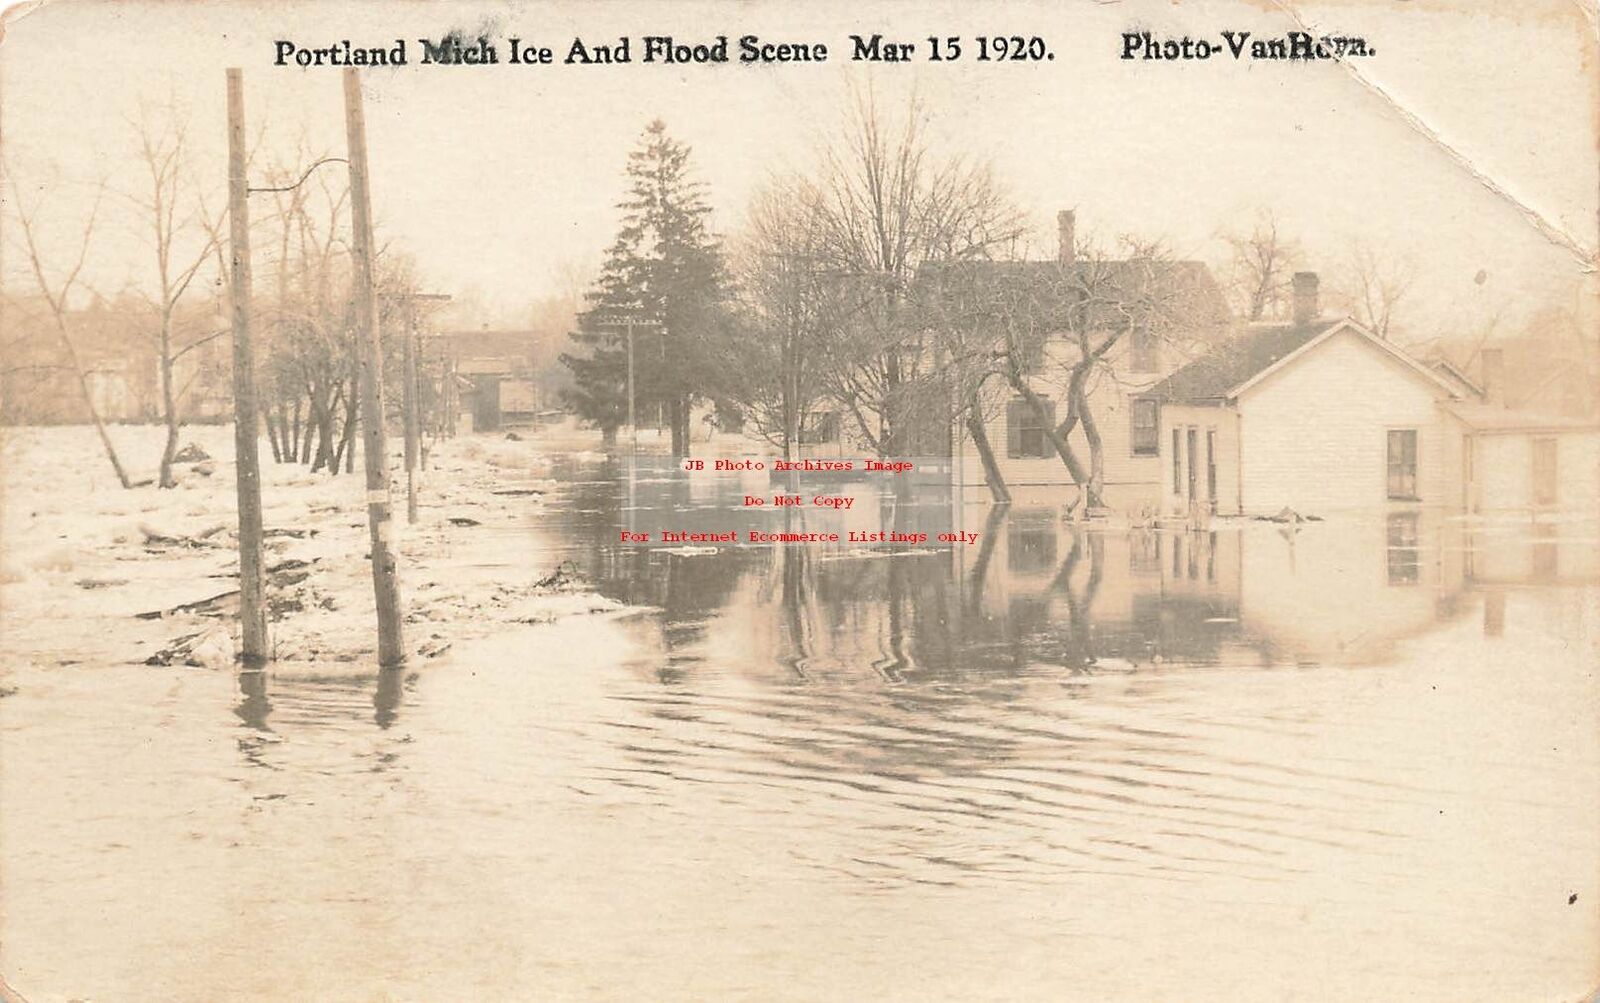 MI, Portland, Michigan, RPPC, Ice & Flood Scene March 1920, Van Horn Photo